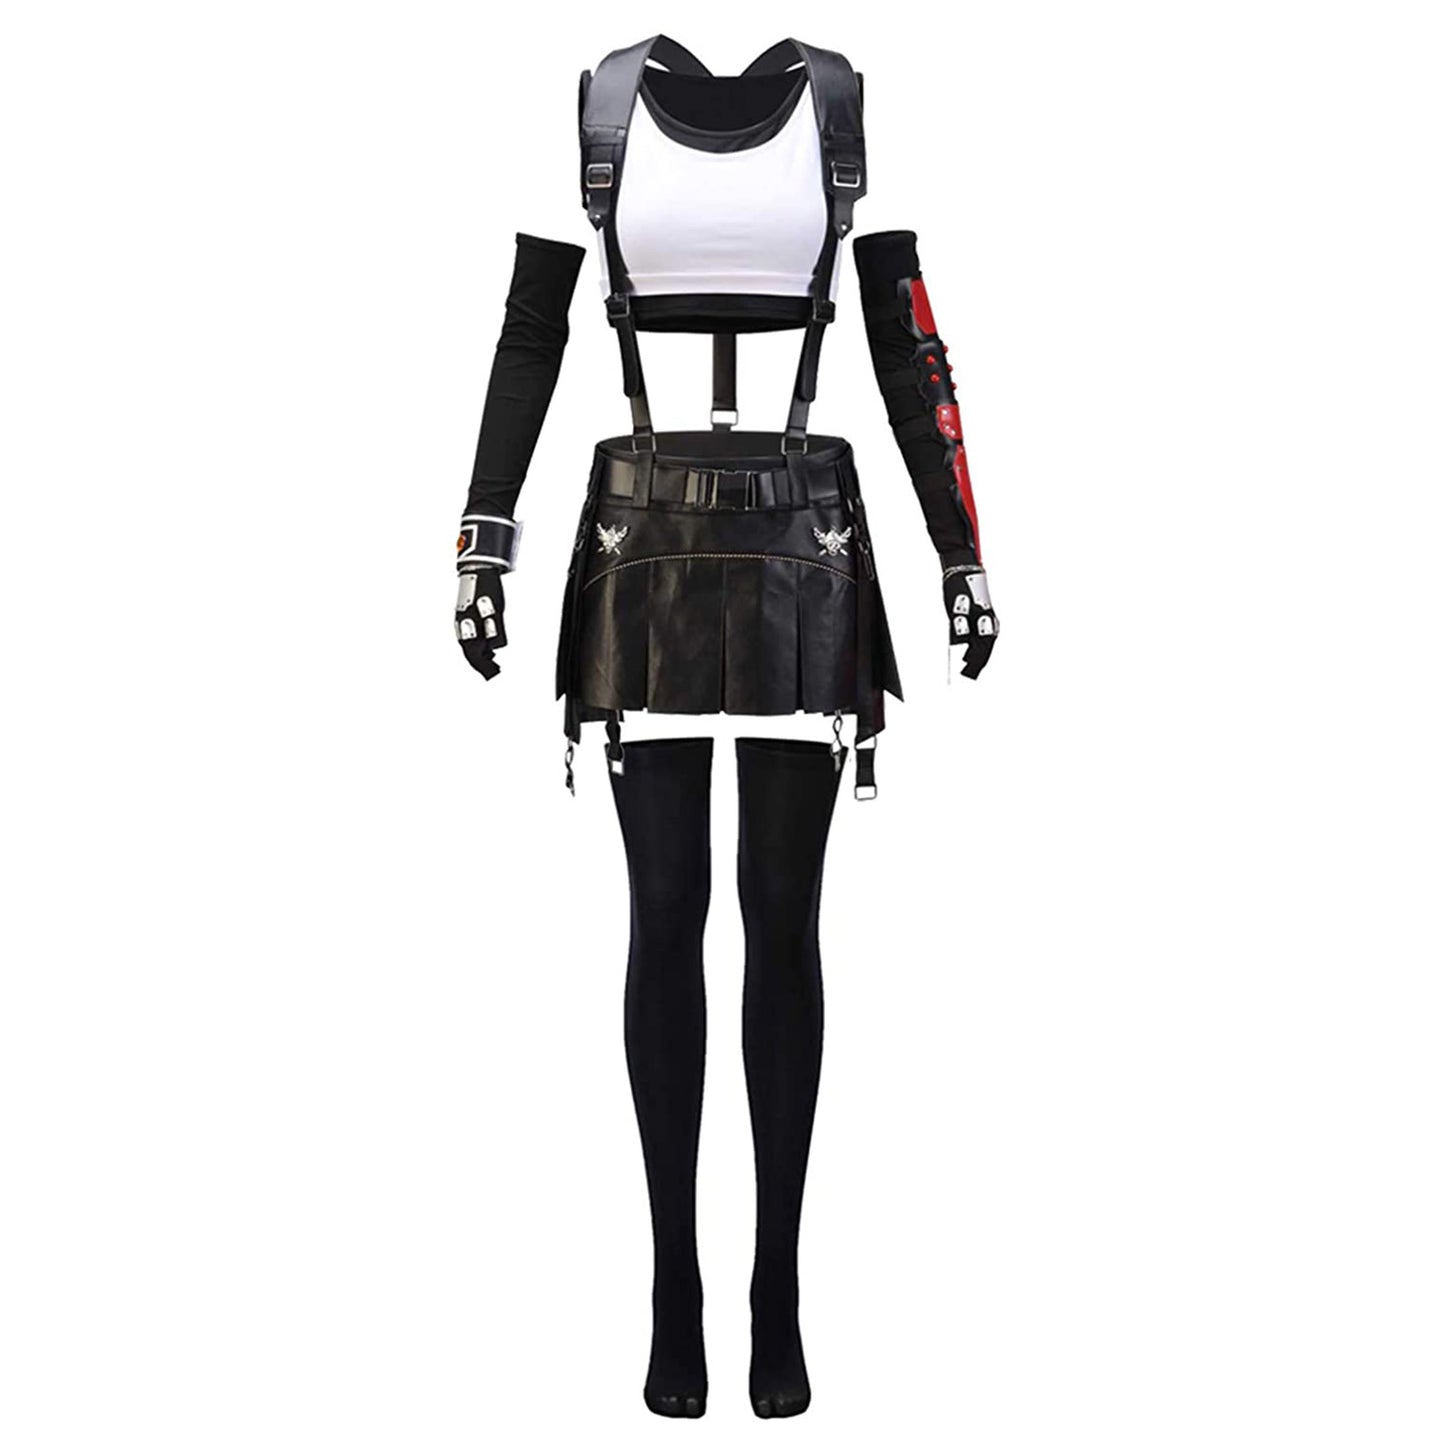 Final Fantasy VII Tifa Lockhart Cosplay Costume Remake Dress Suit Uniform Full Sets